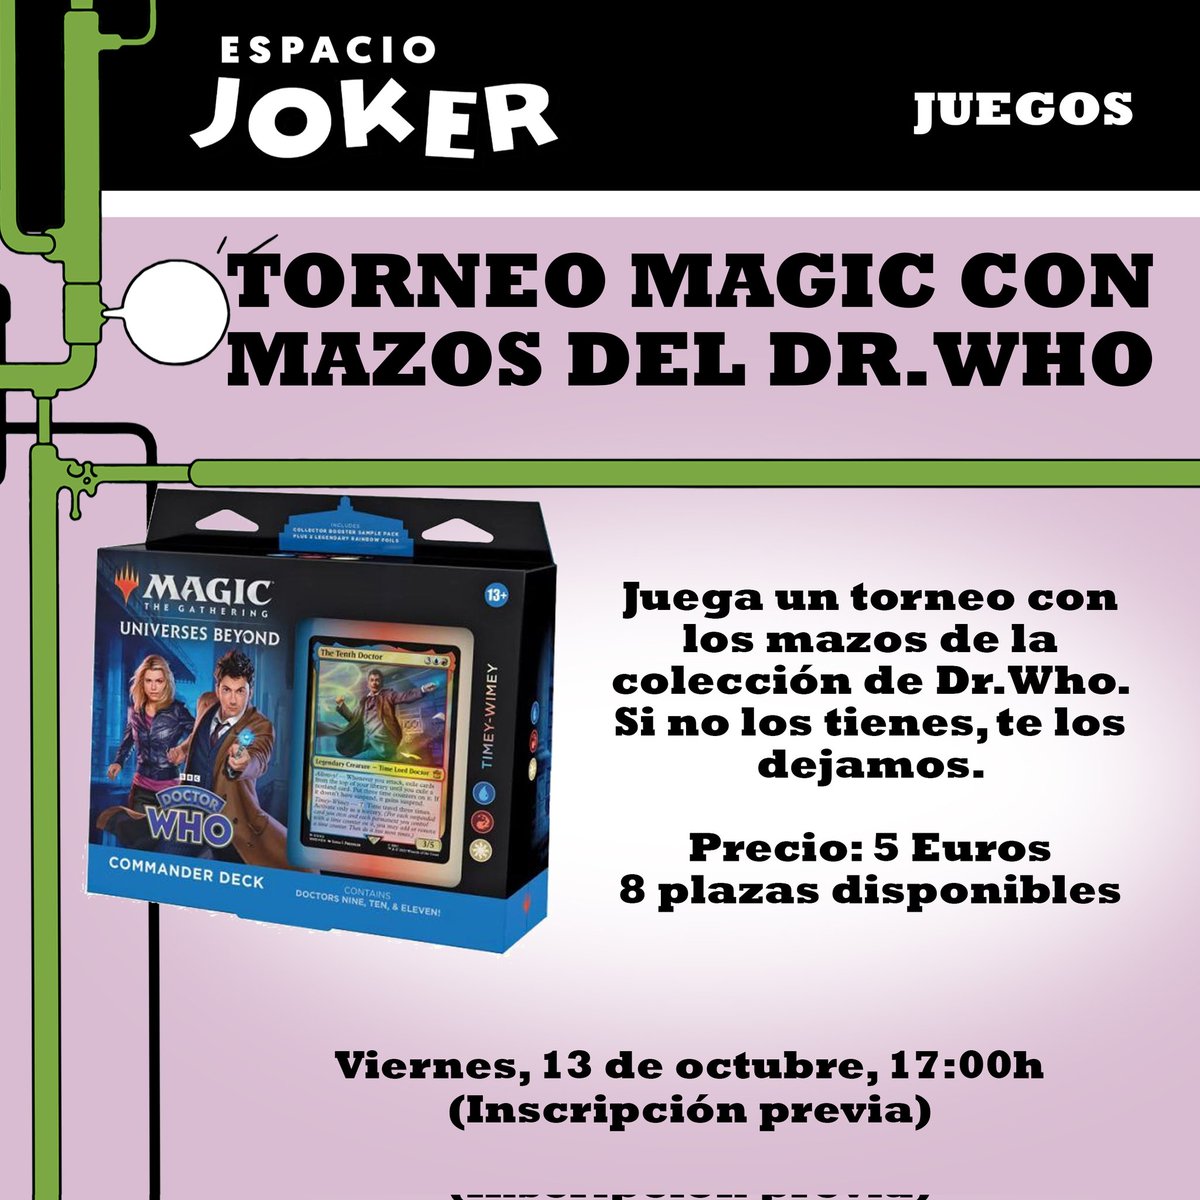 ¡El viernes 13 torneo de Magic  de Dr. Who en espacio Joker! Ven a jugar a partir de las 17:00.
Tendremos mazos disponibles para jugar.

¡Plazas limitadas!

#comic #libreriaJoker #eventosJoker #espacioJoker #juegosdemesa #torneomagic #bilbao